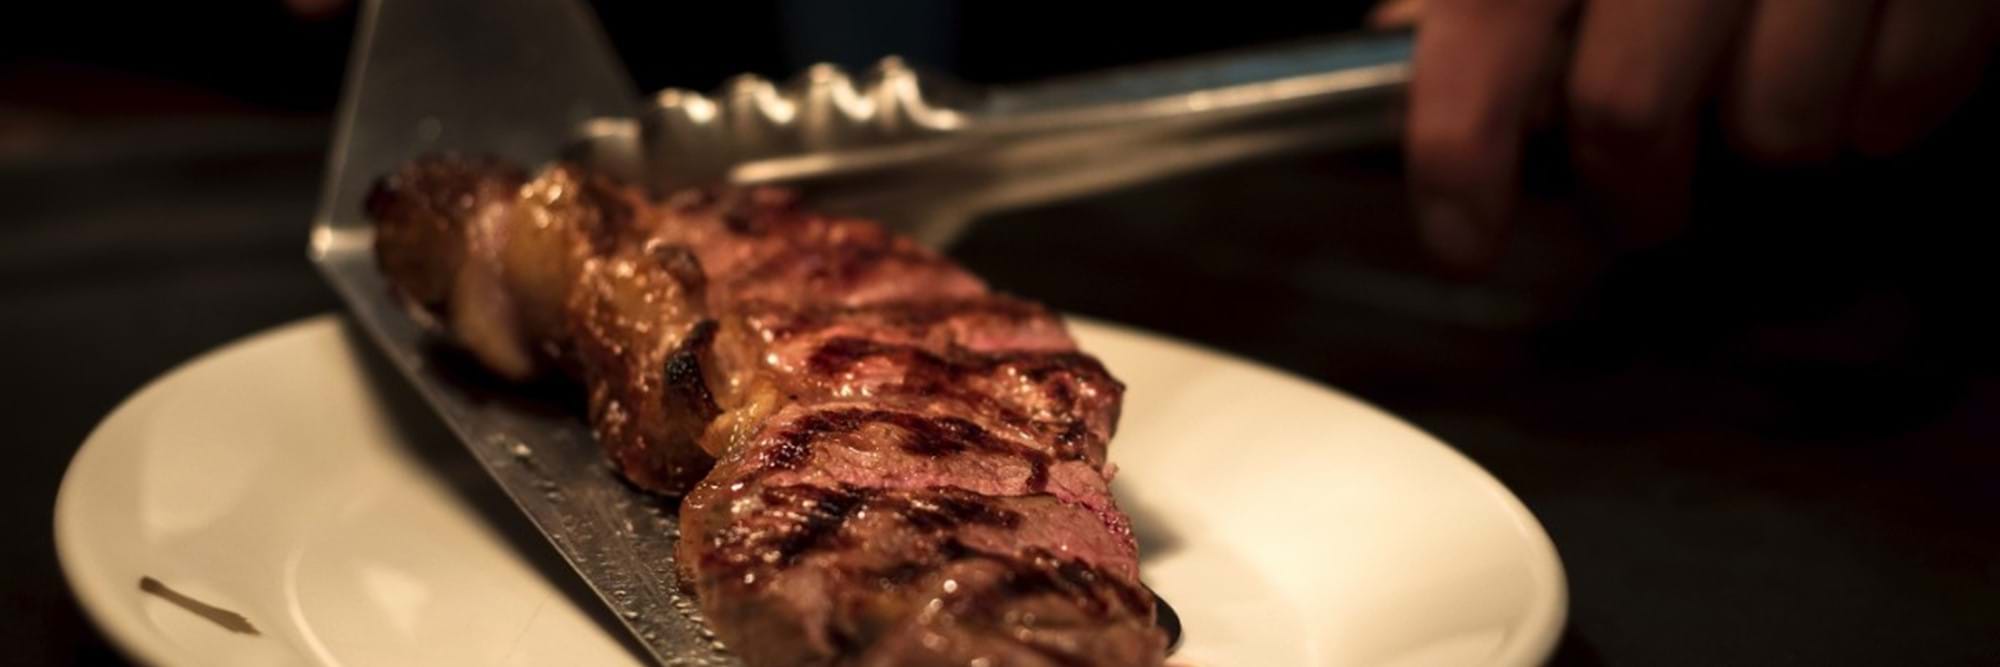 Steak Being Served At Zelman Meats Restaurant In London